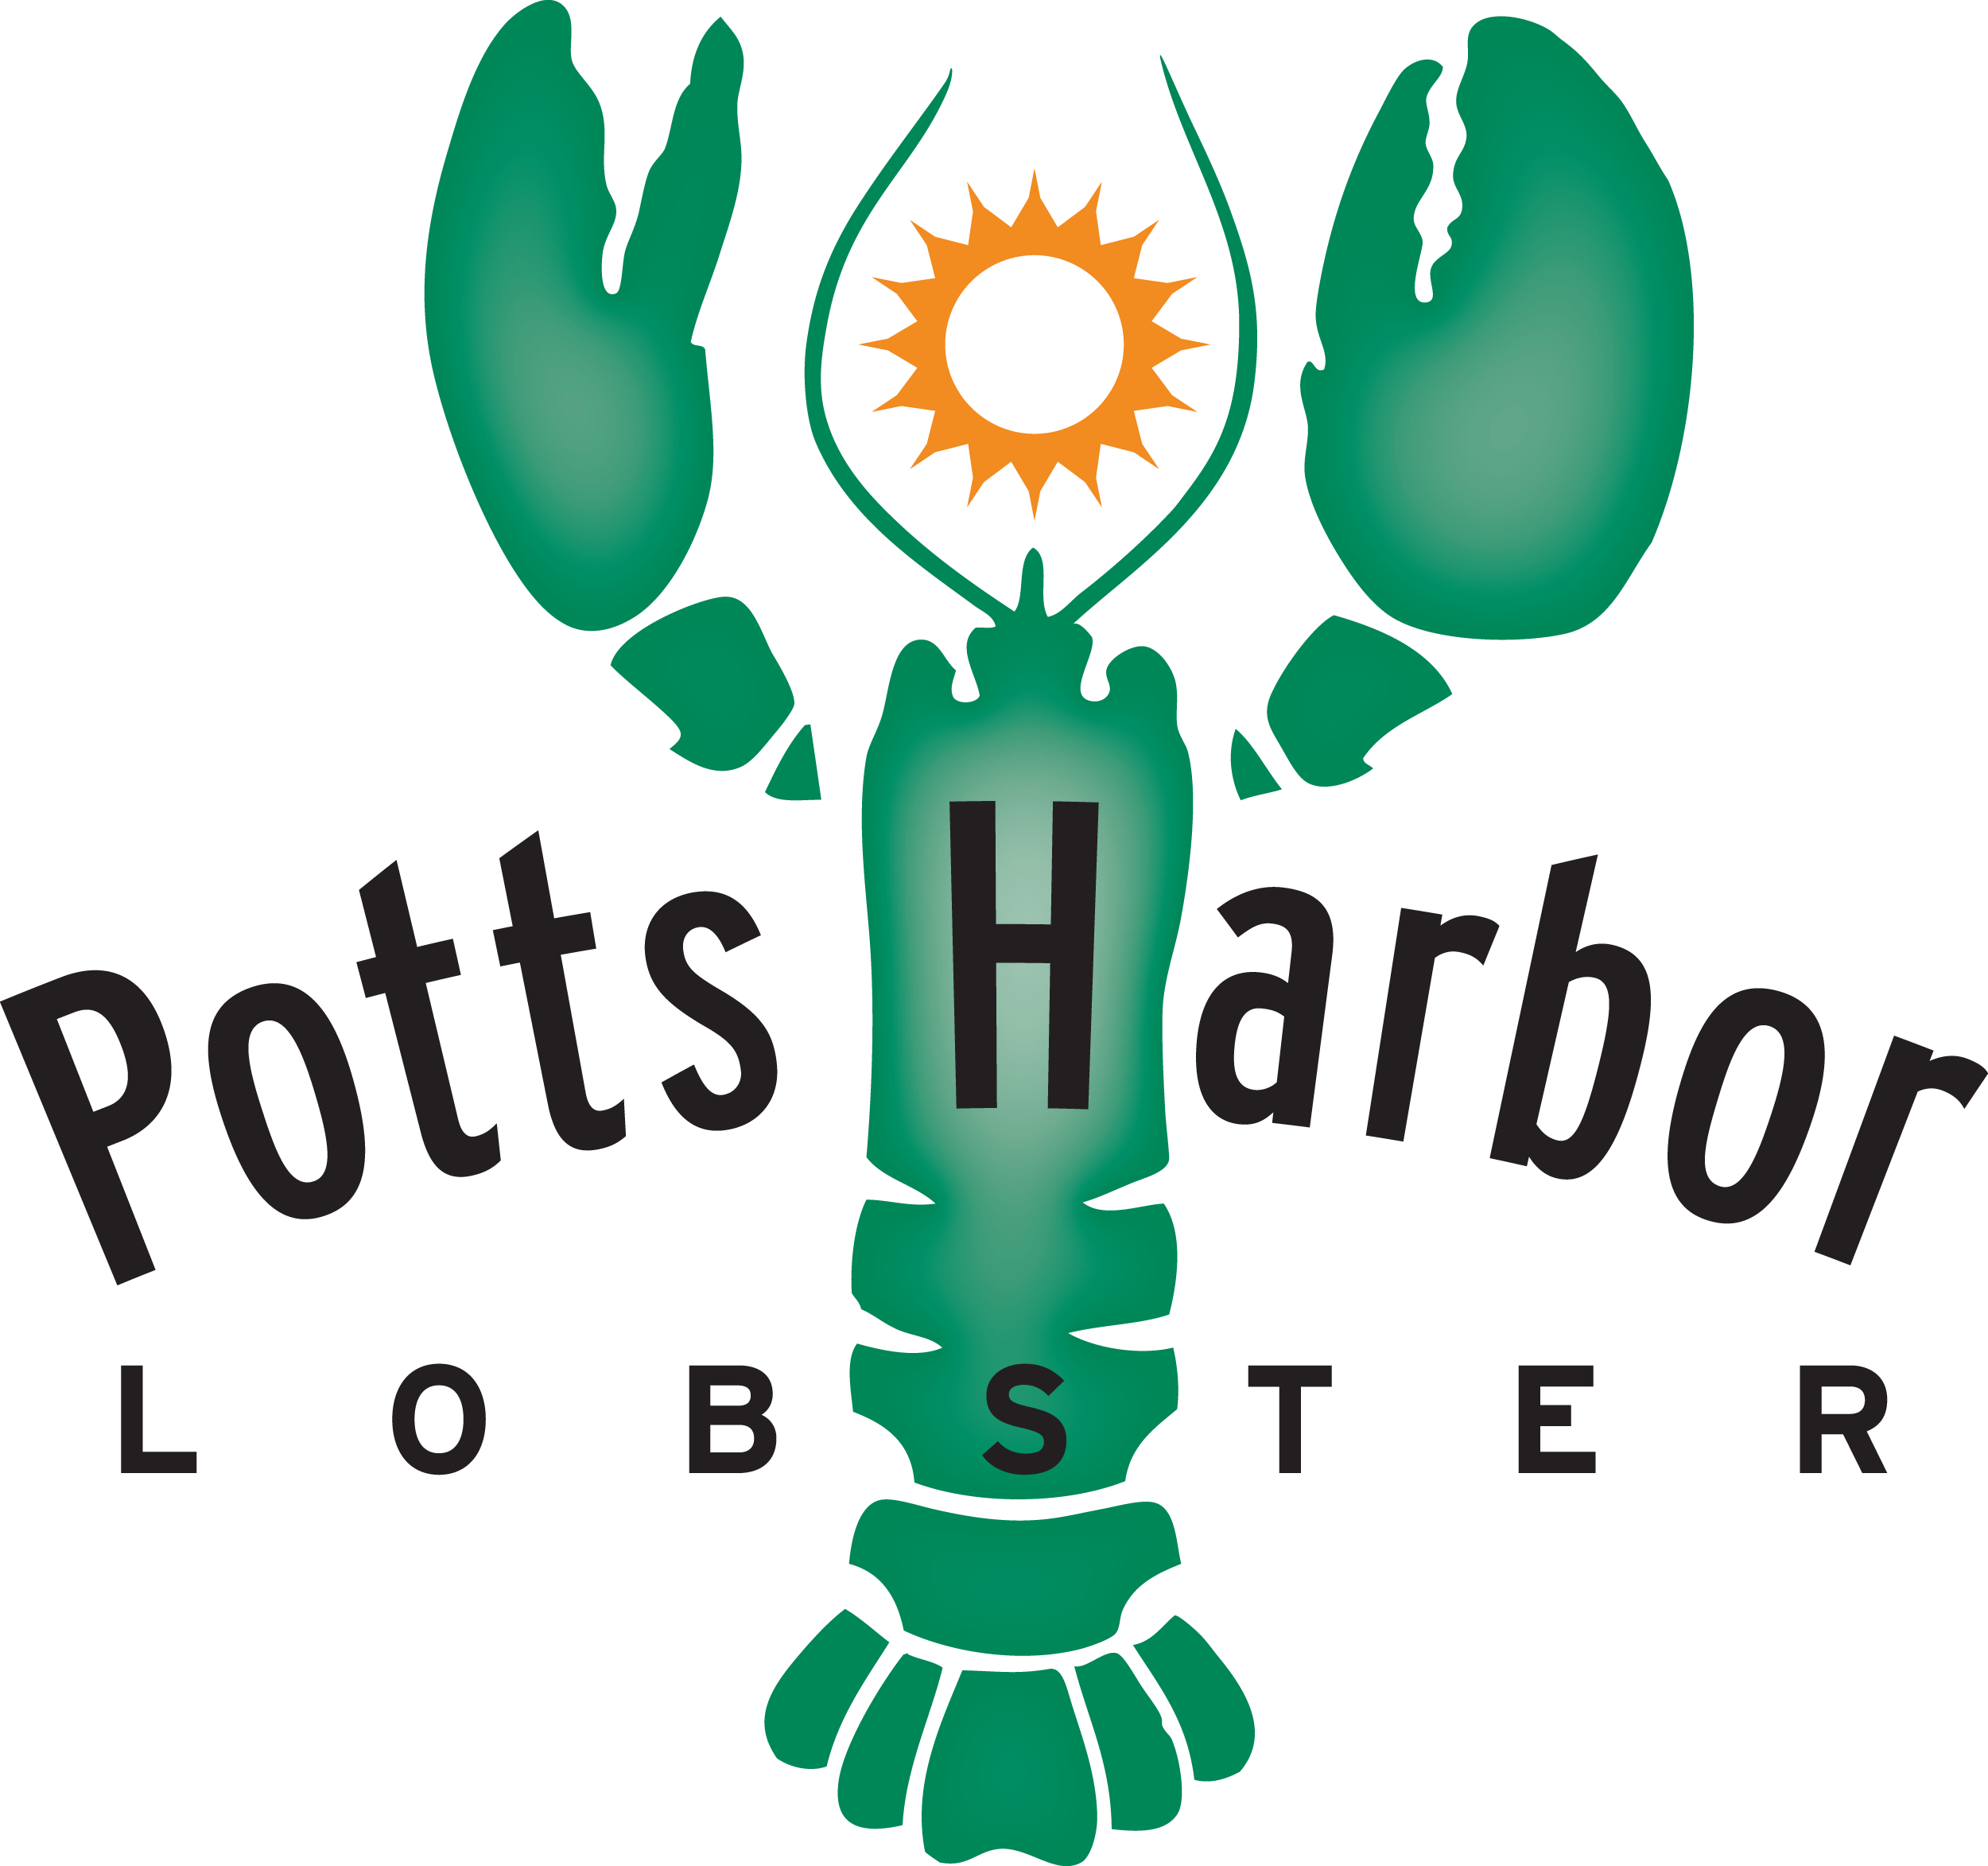 Potts Harbor Lobster